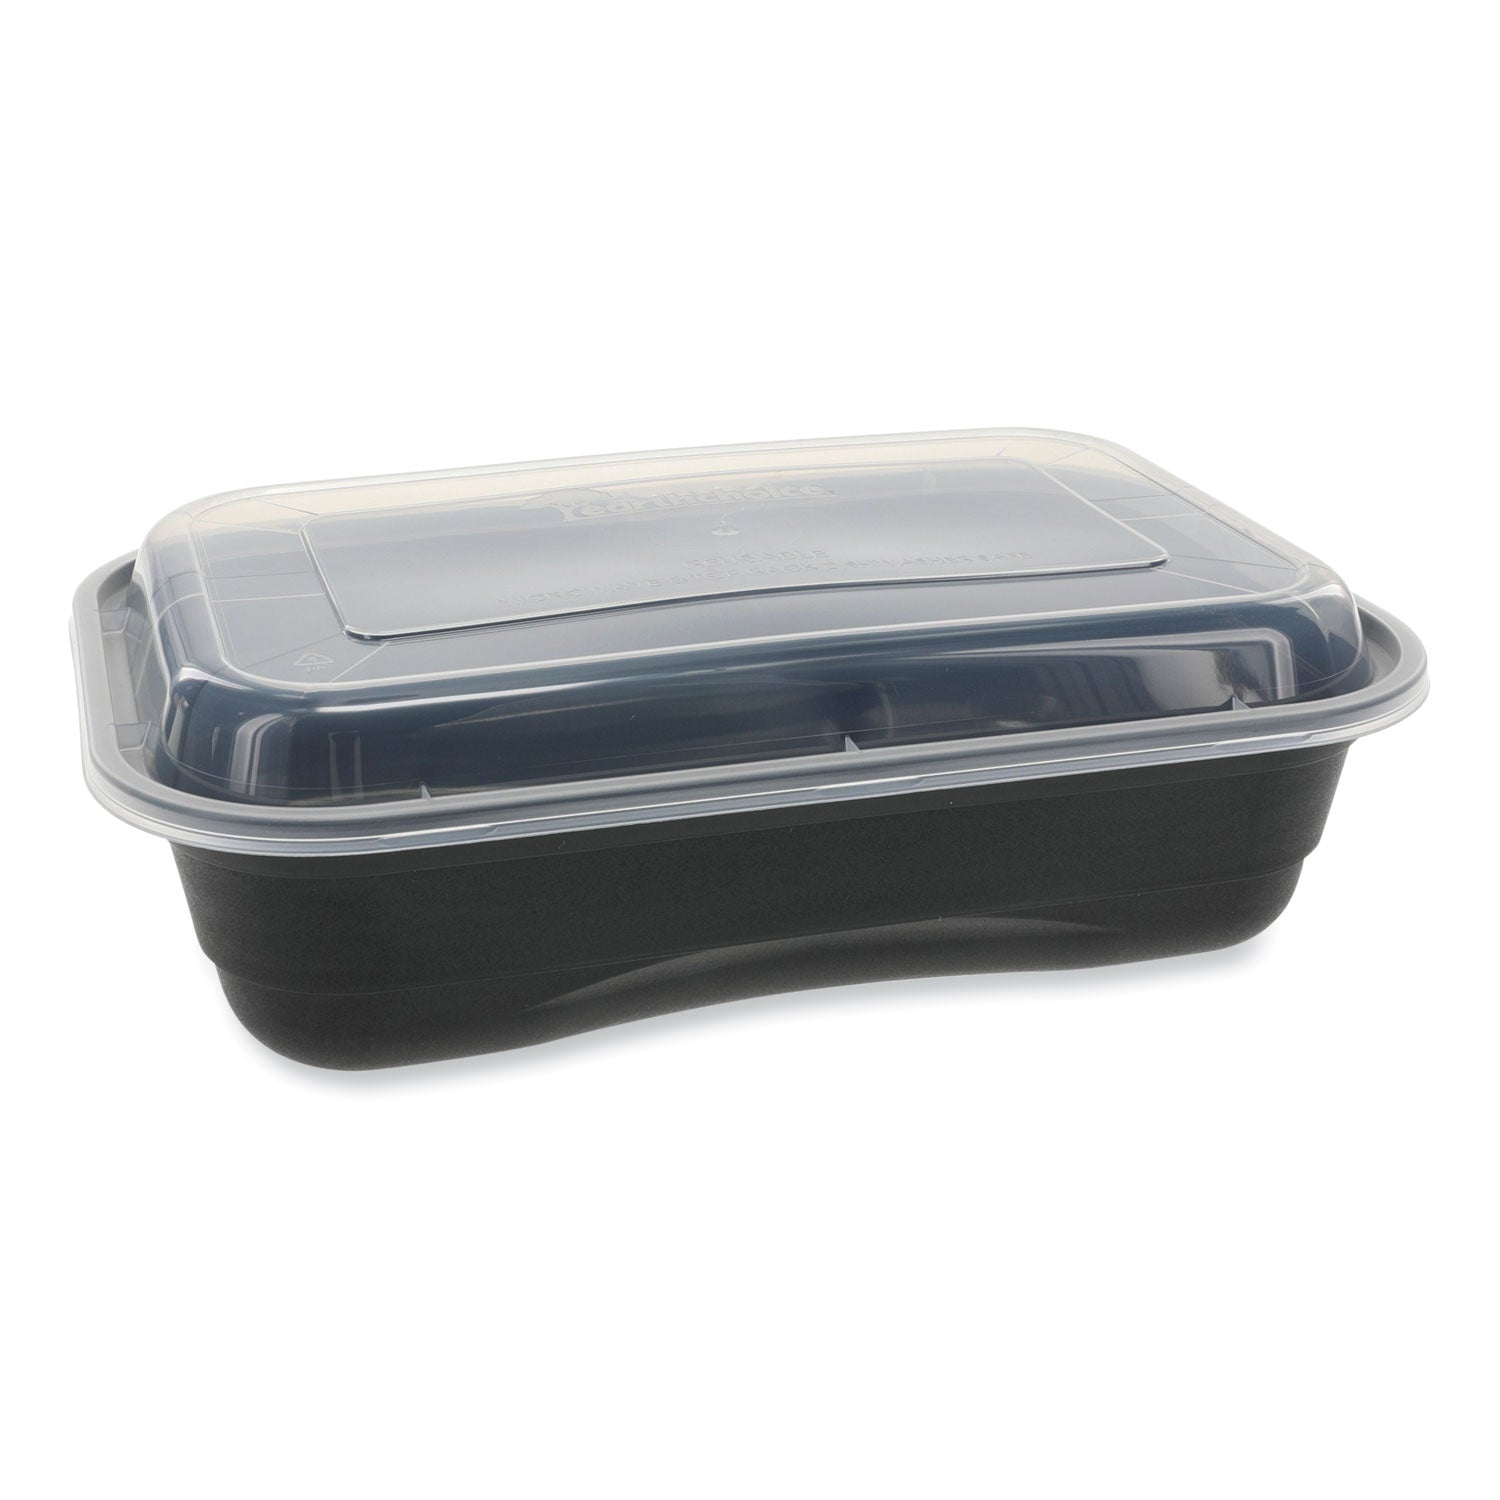 earthchoice-versa2go-microwaveable-container-36-oz-84-x-56-x-2-black-clear-plastic-150-carton_pctnv2grt3688b - 3